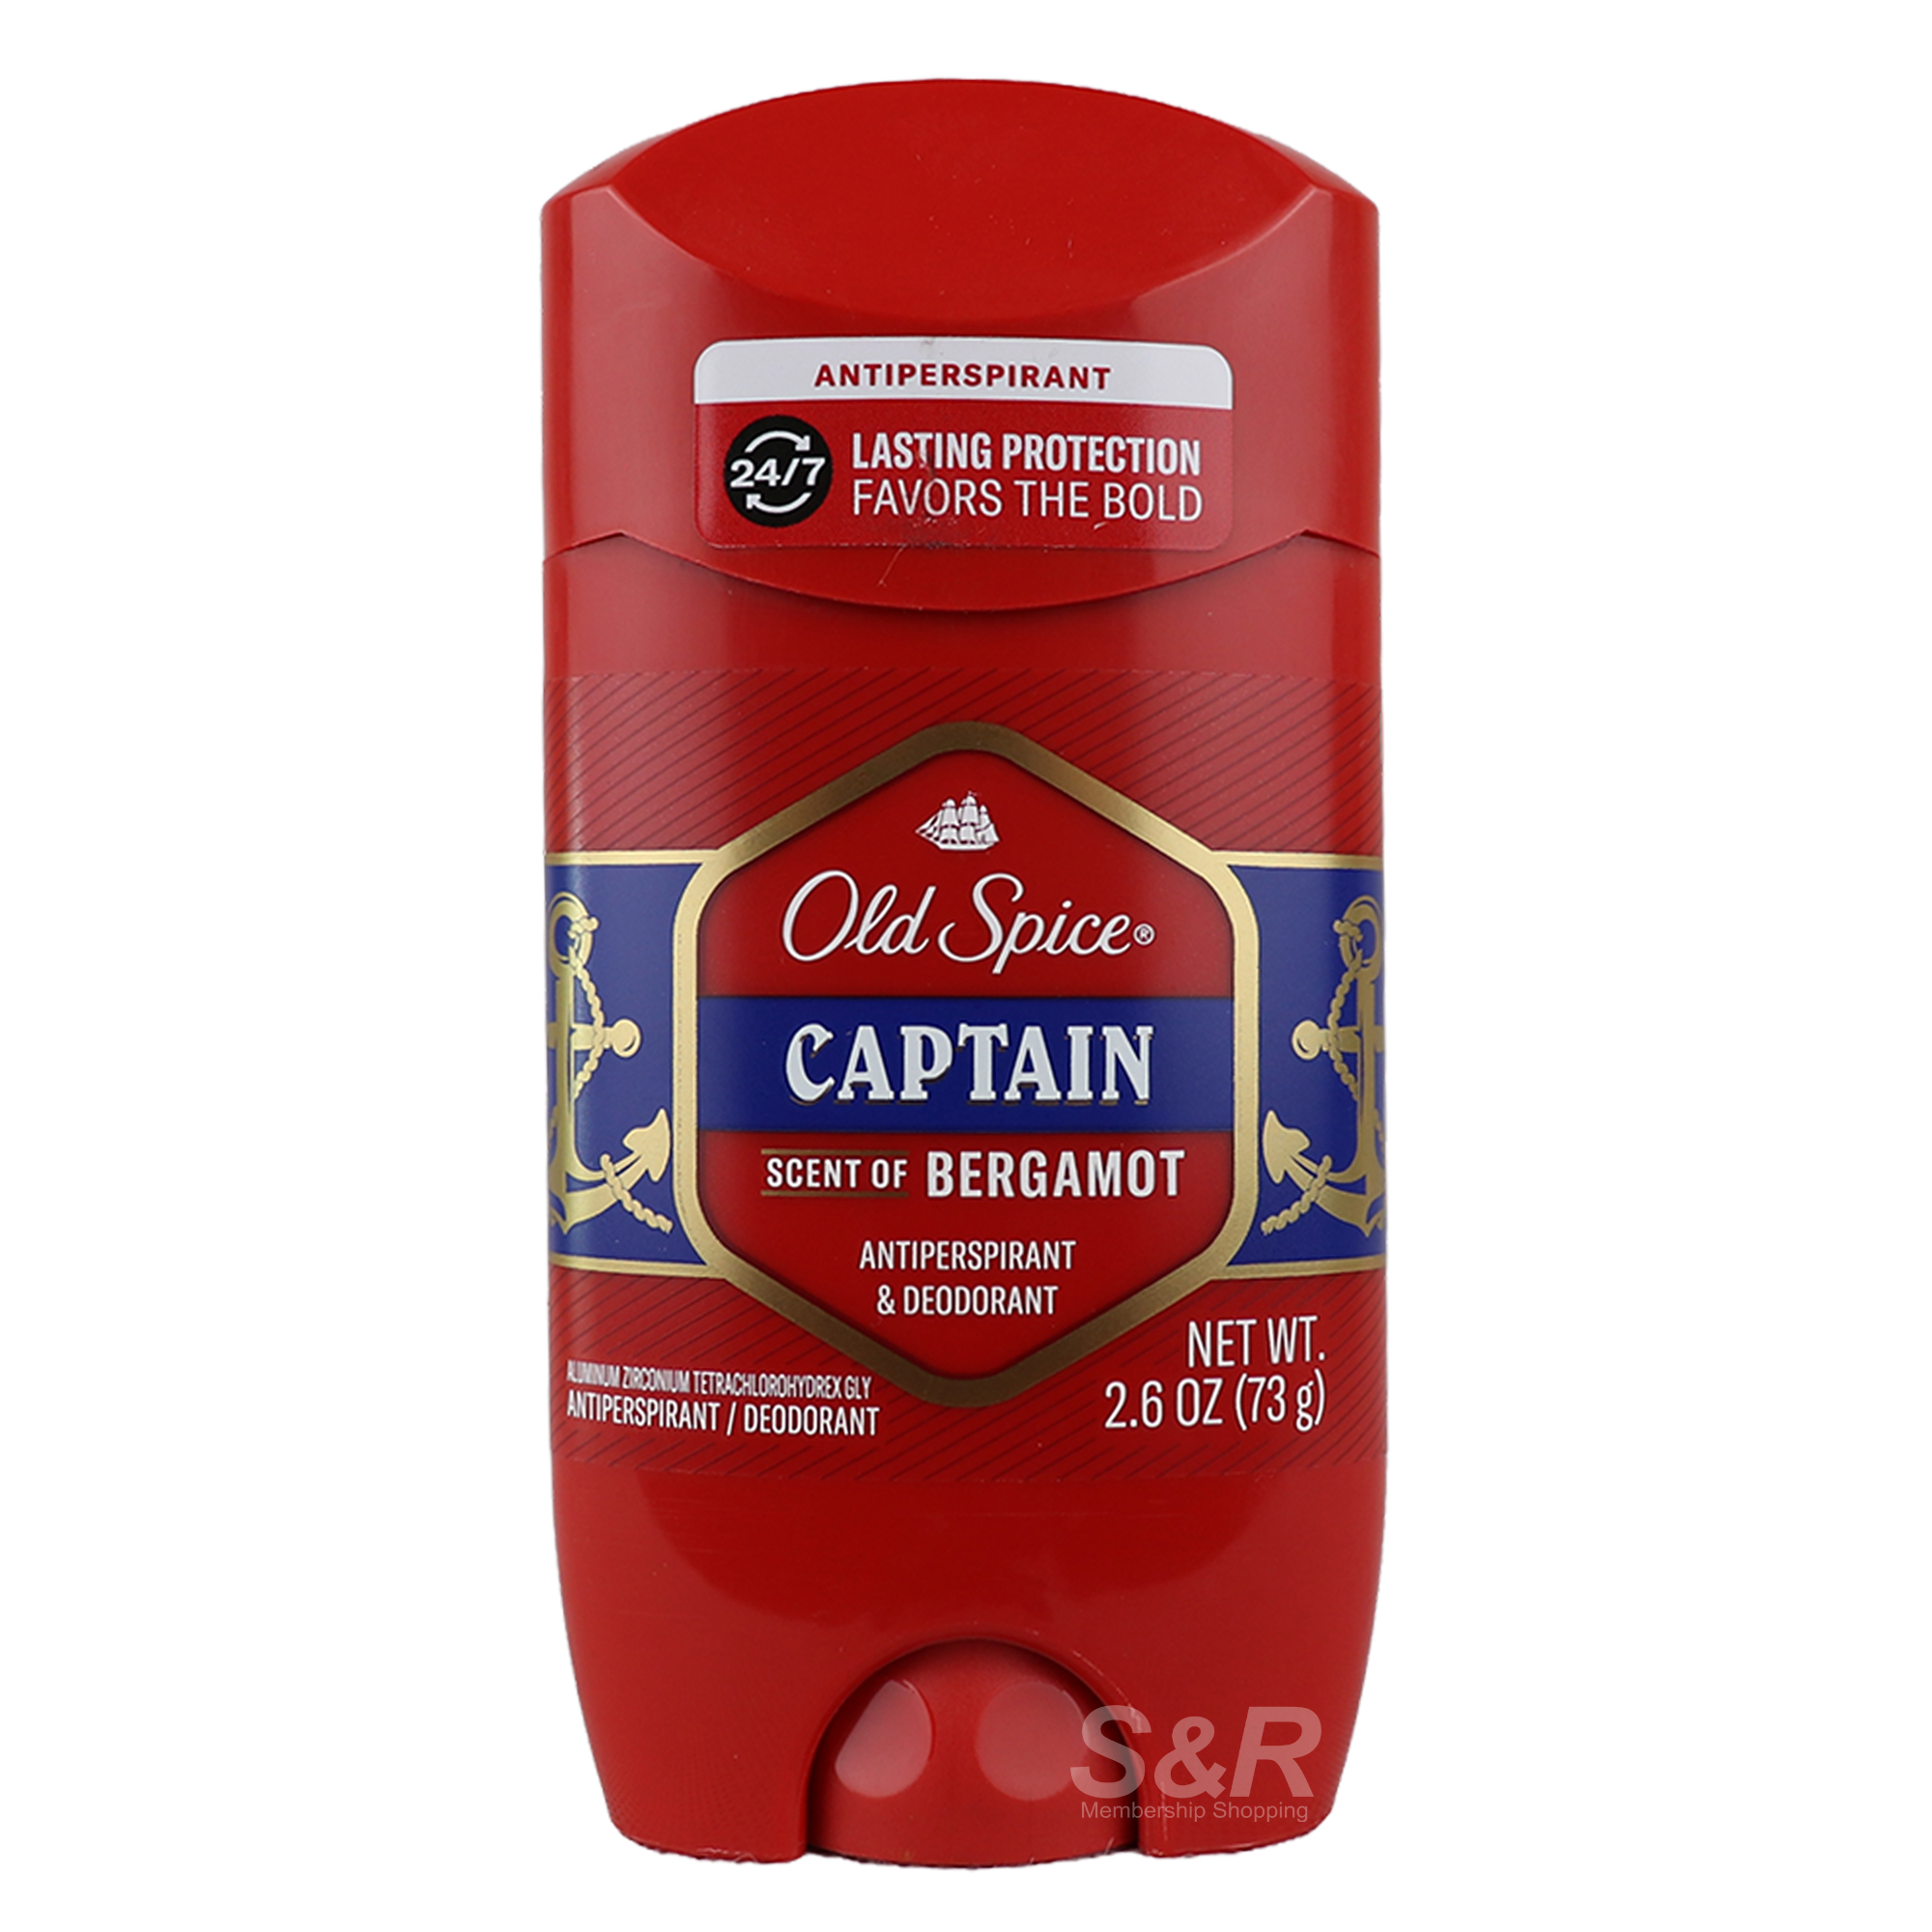 Old Spice Captain Deodorant 73g